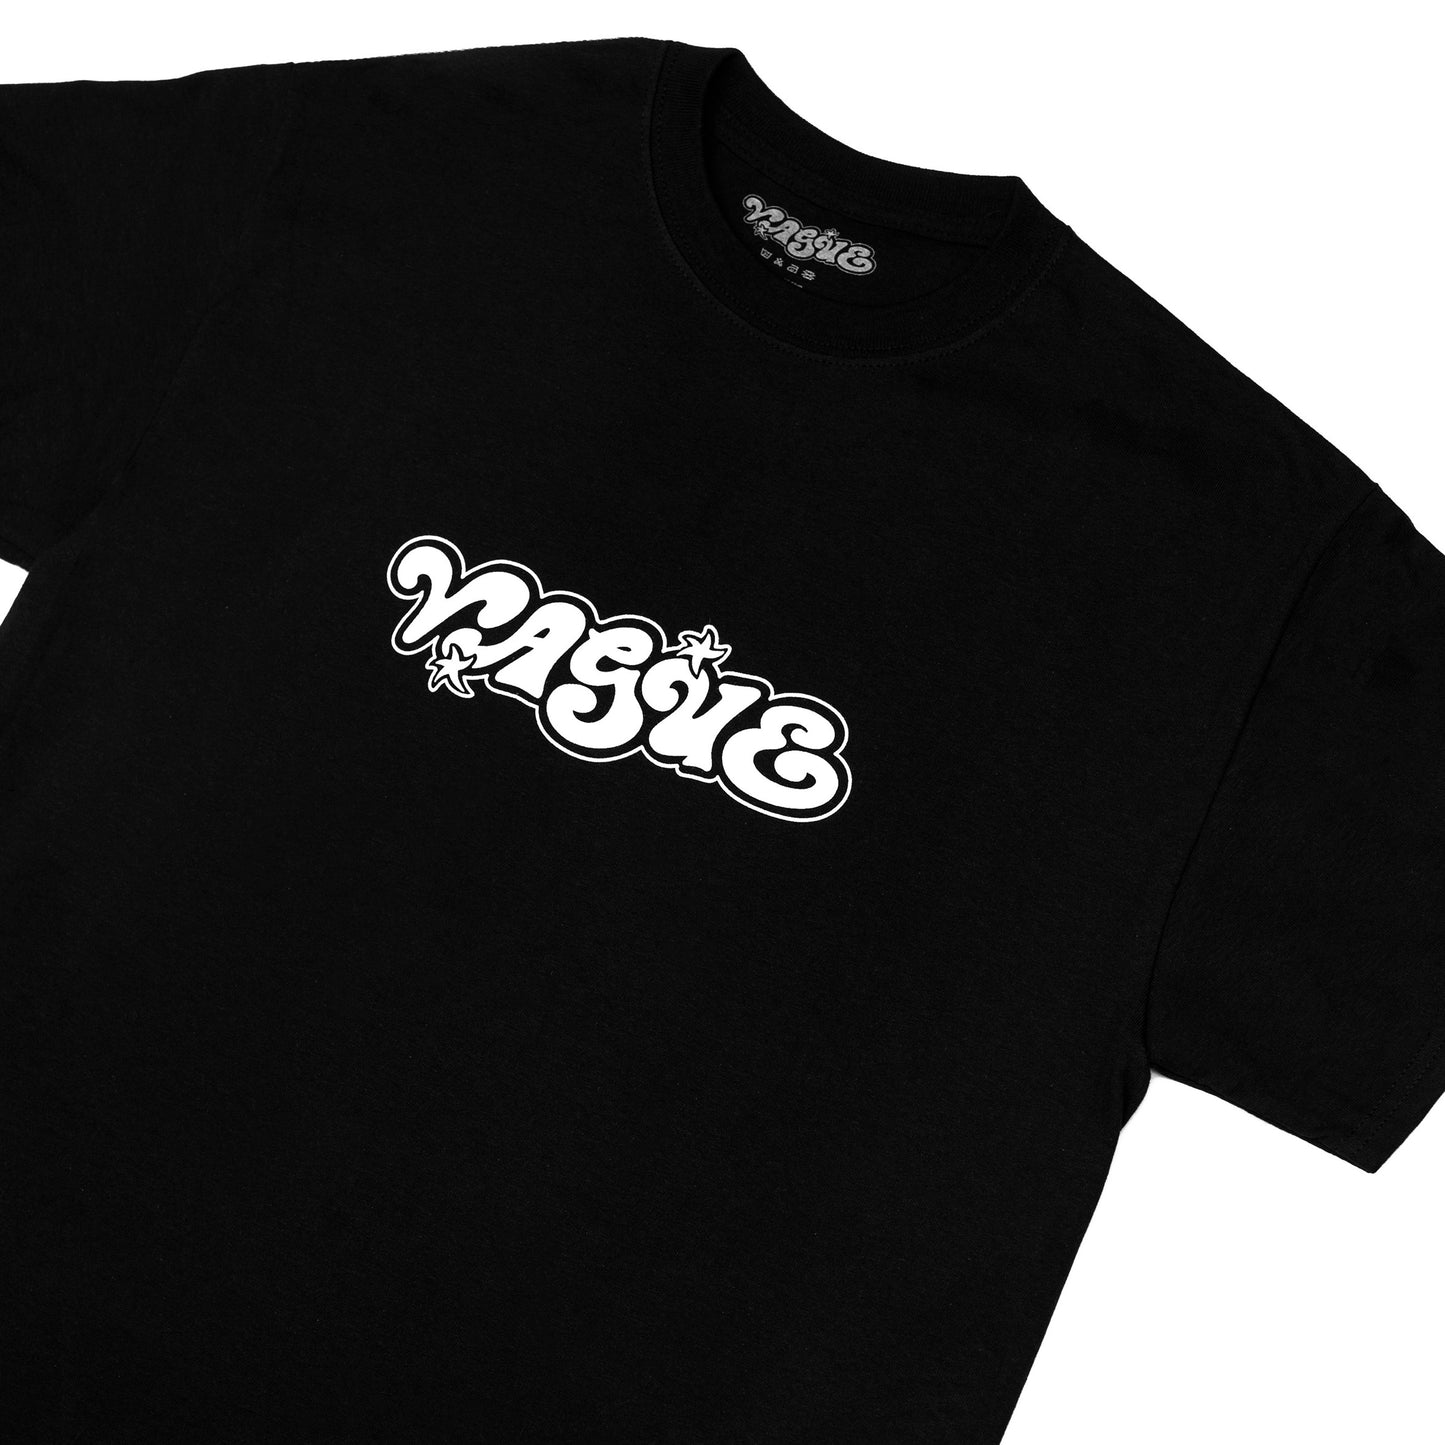 Vague x Kyle Platts - Bubble Type - Black T-Shirt